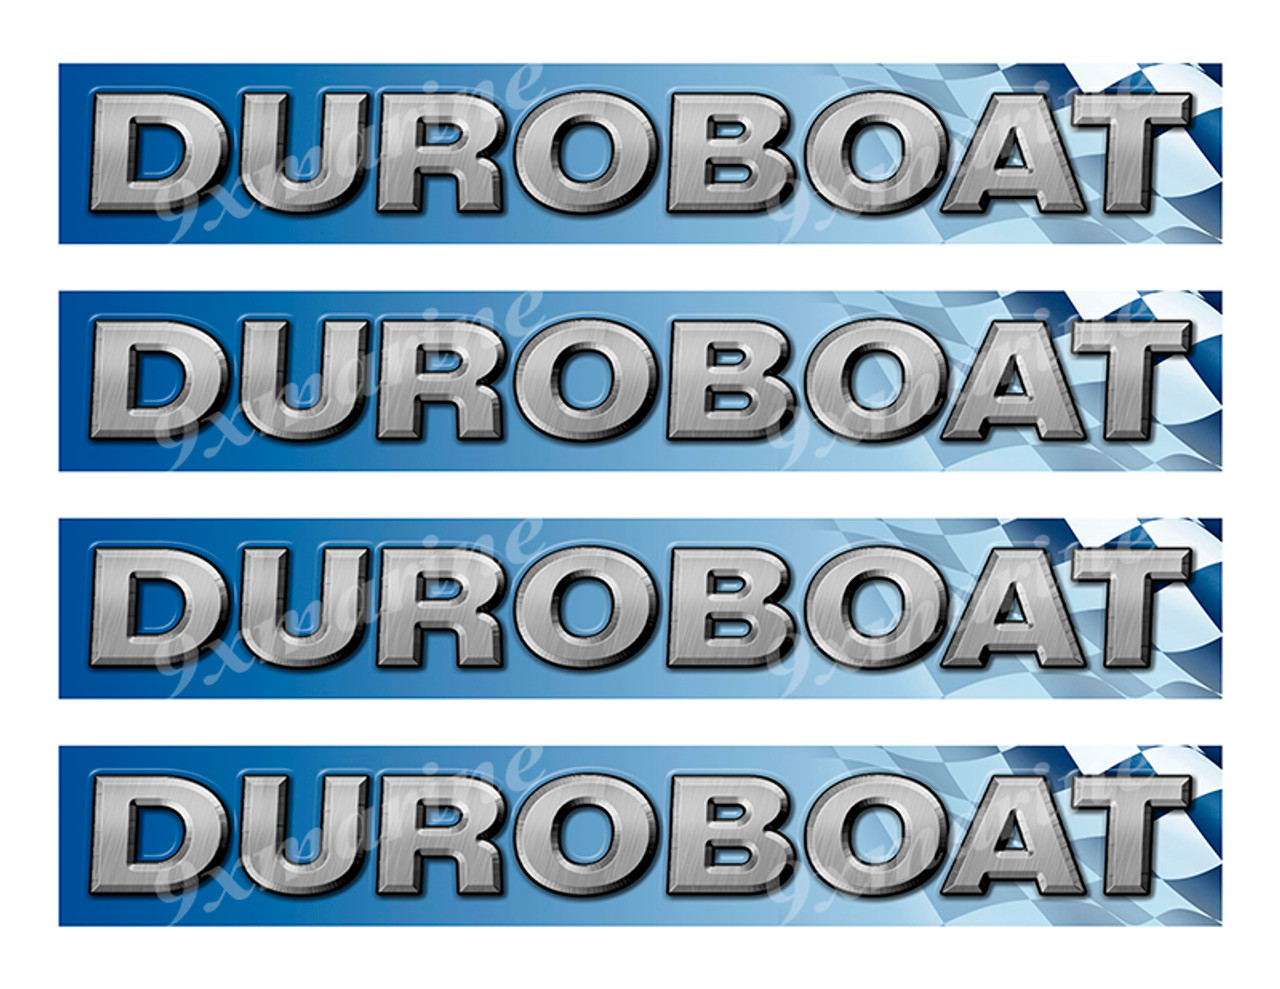 Duroboat Racing Sticker Set - 10"x1.6" each